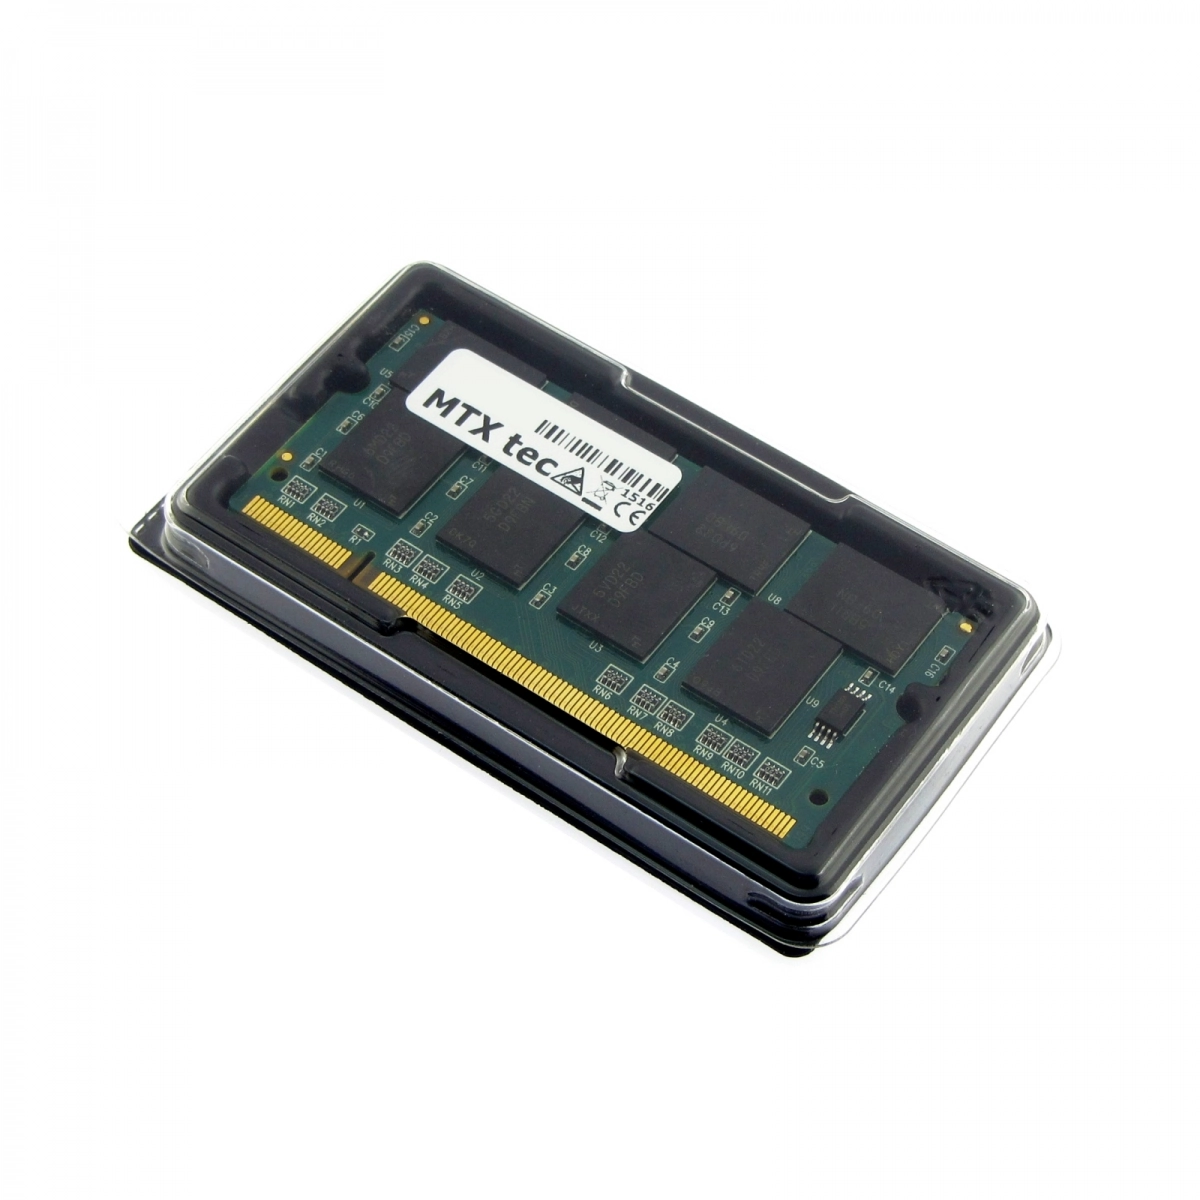 MTXtec Arbeitsspeicher 1 GB RAM für FUJITSU Amilo A-1650, A1650